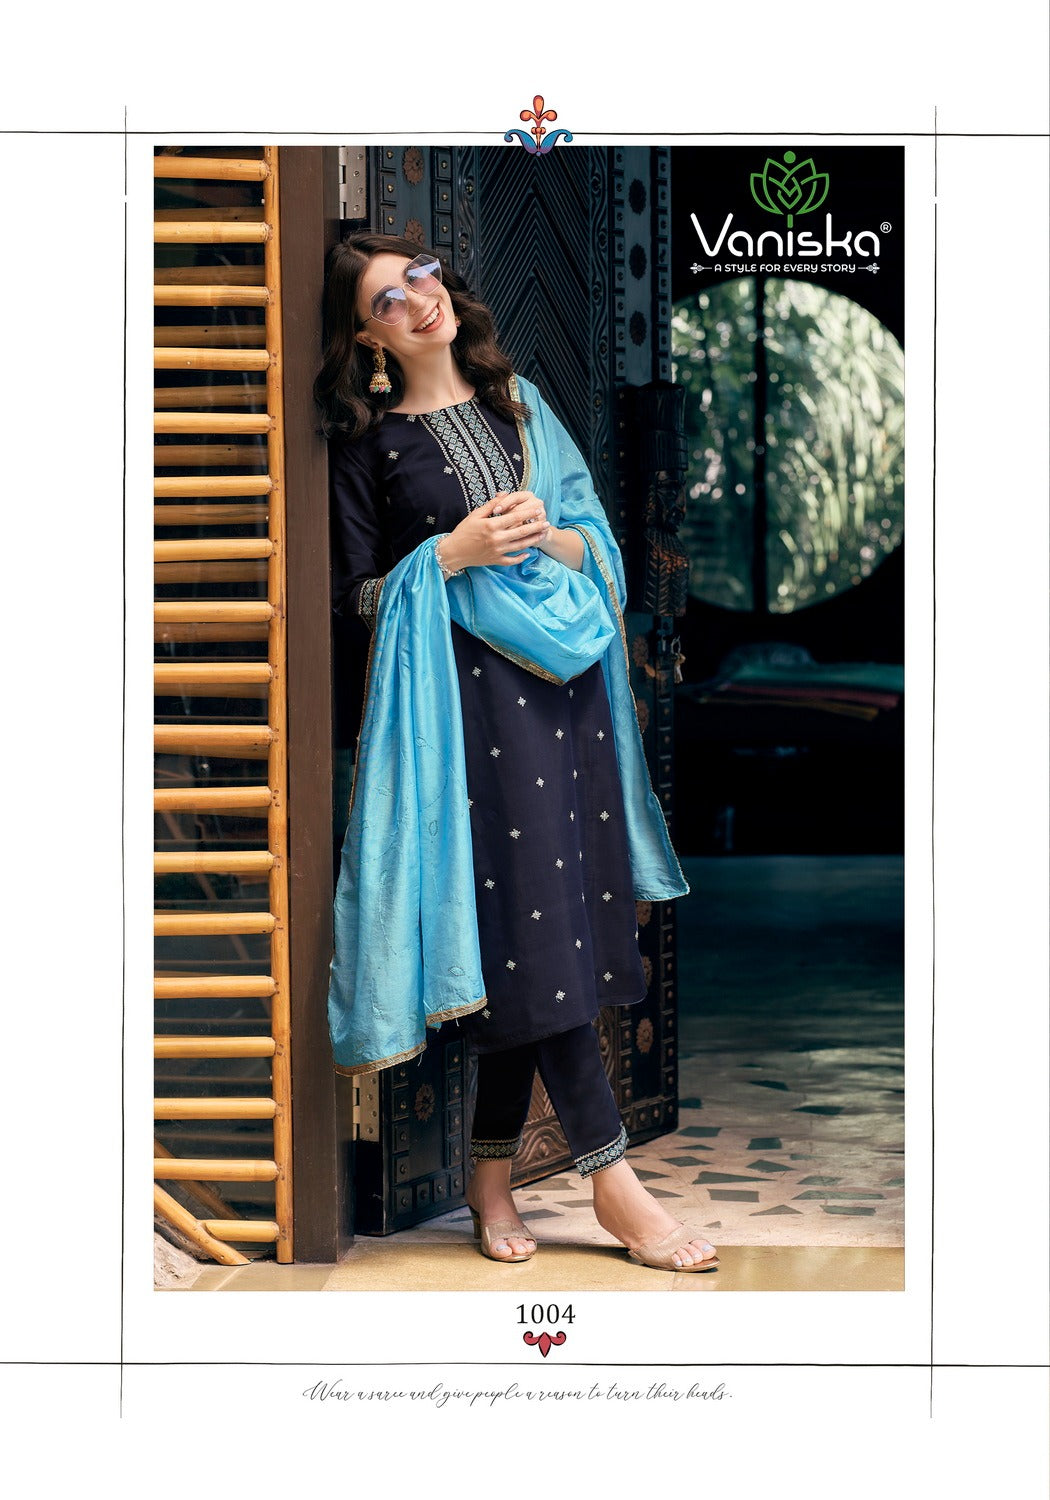 Fiza Vol 1-Vaniska Colour Pix Roman Silk Readymade Pant Style Suits Exporter India